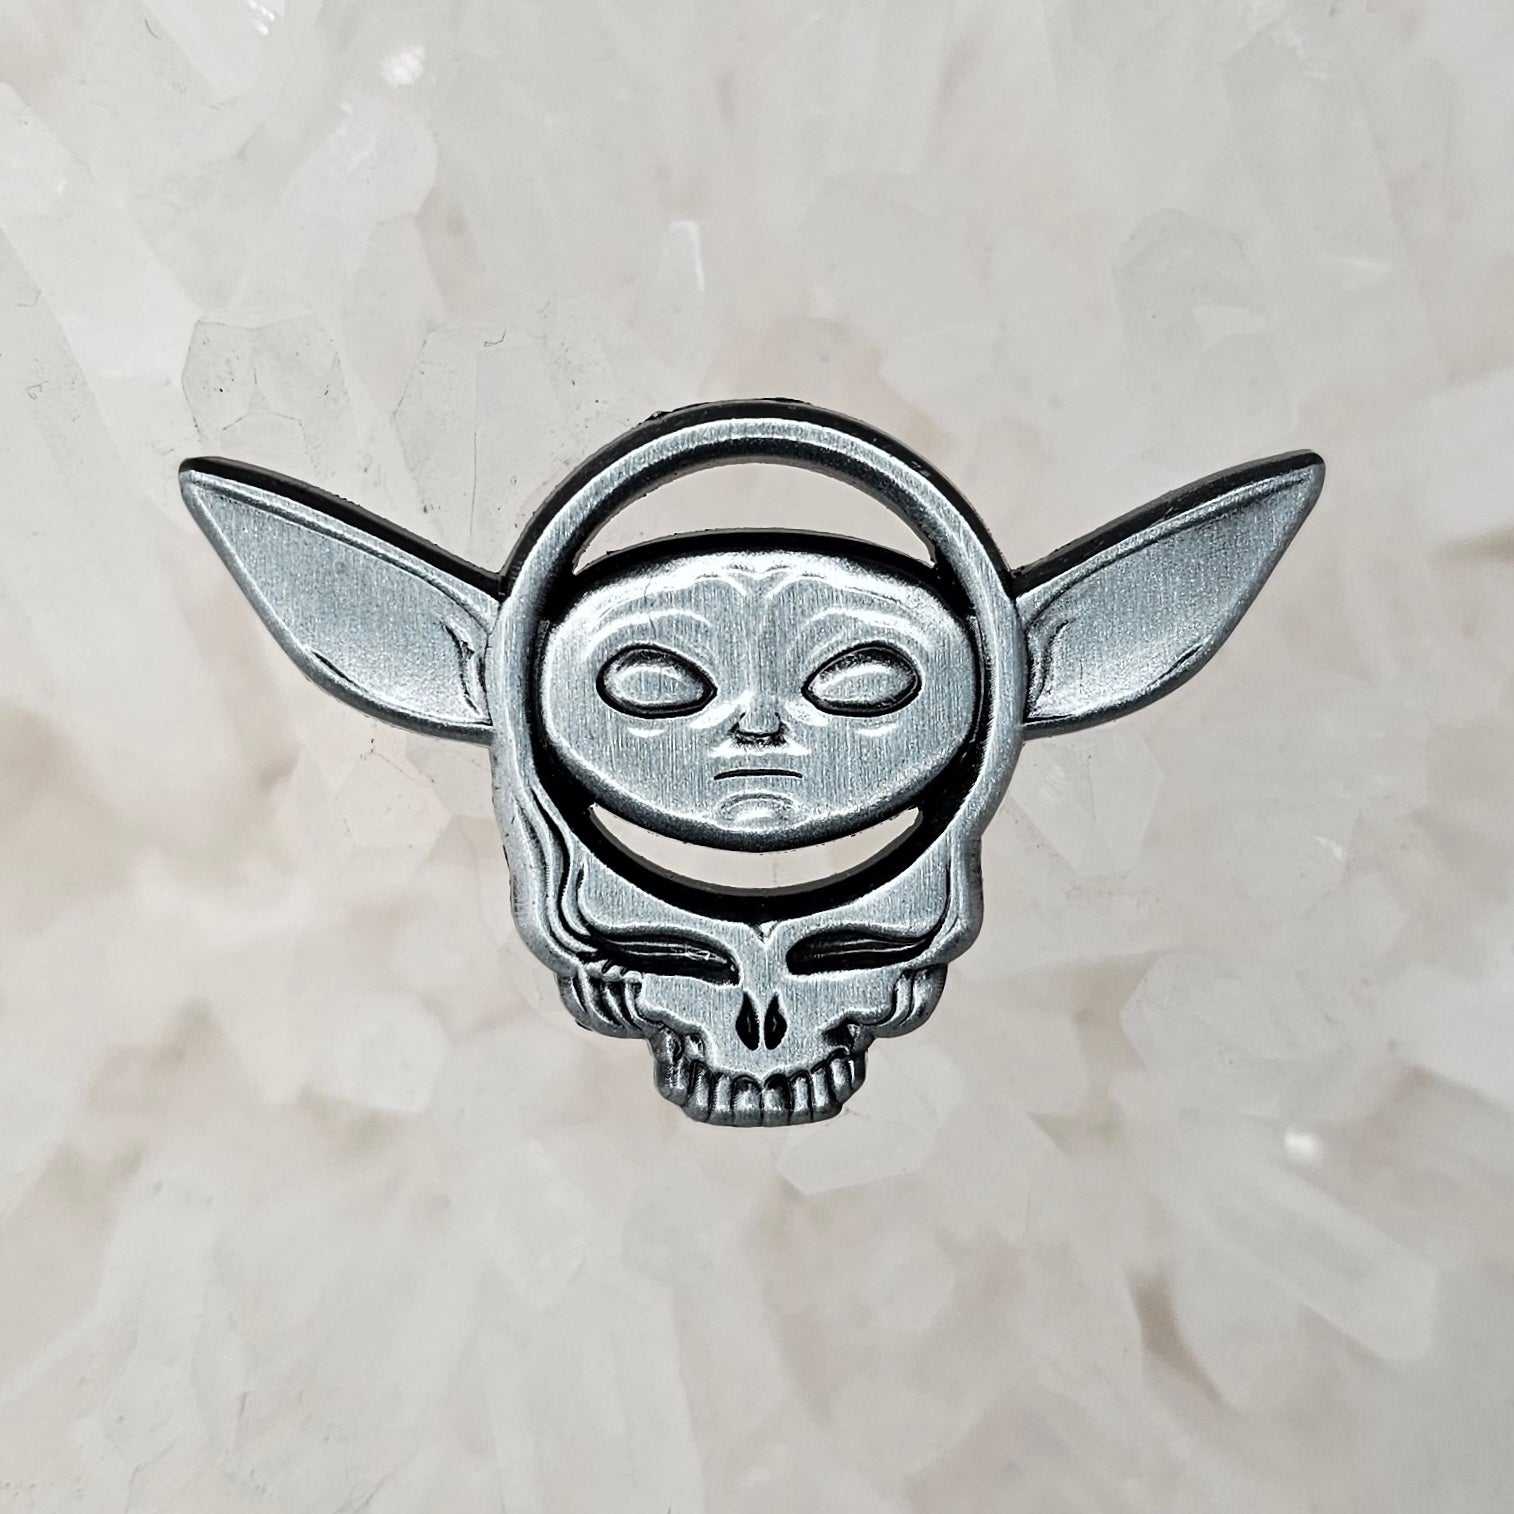 Forever Grateful Baby Alien Stealie Skull 3D Metal Enamel Pins Hat Pins Lapel Pin Brooch Badge Festival Pin